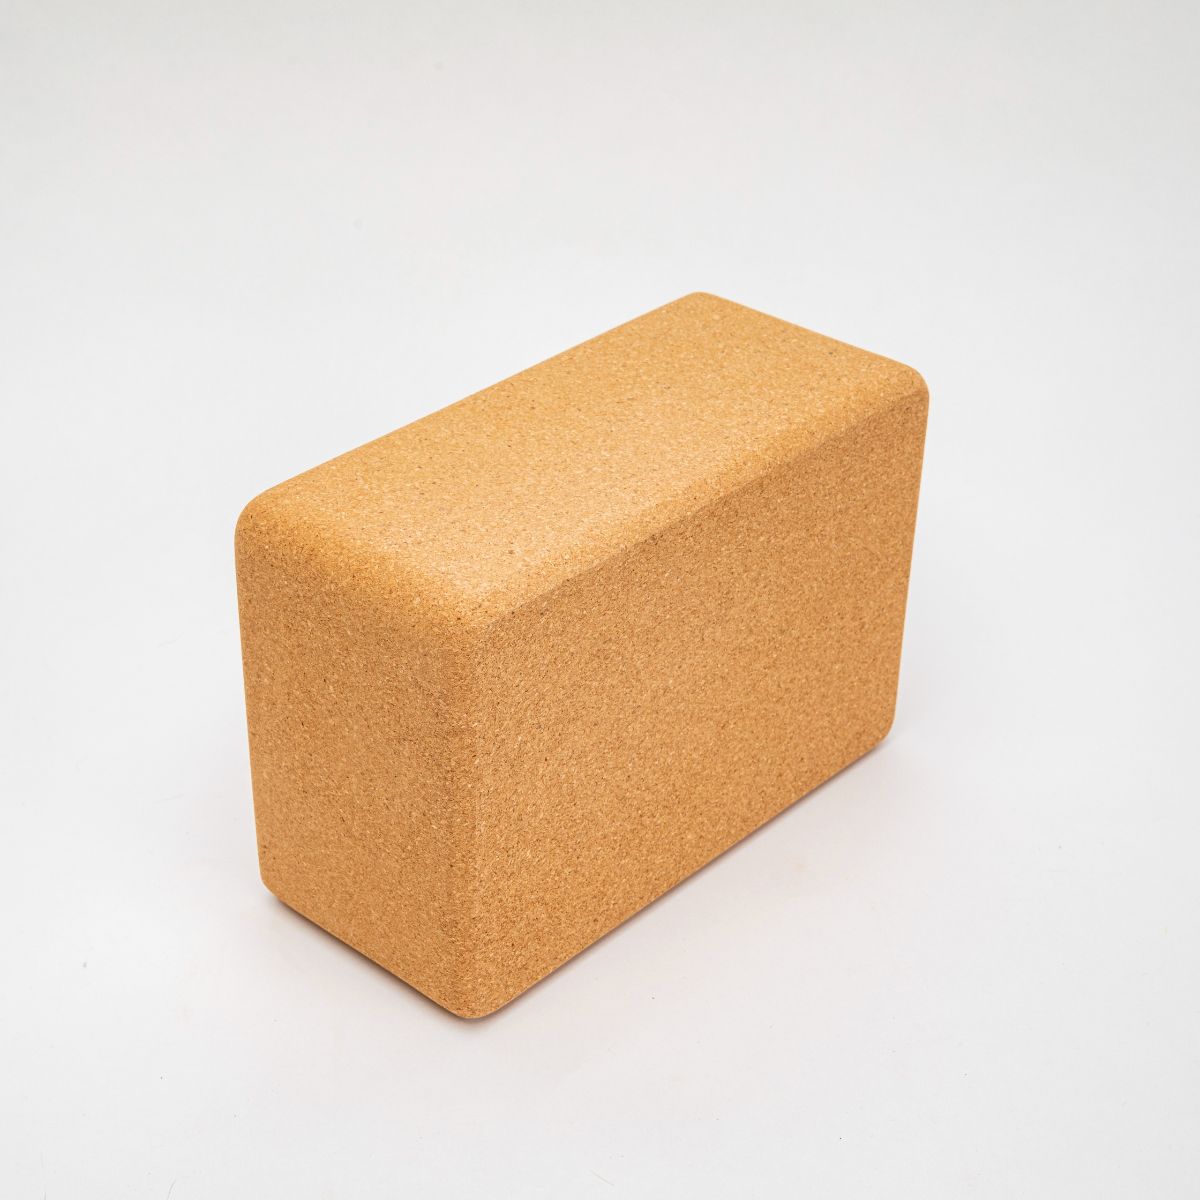 Cork Yoga Block – DharmaCrafts